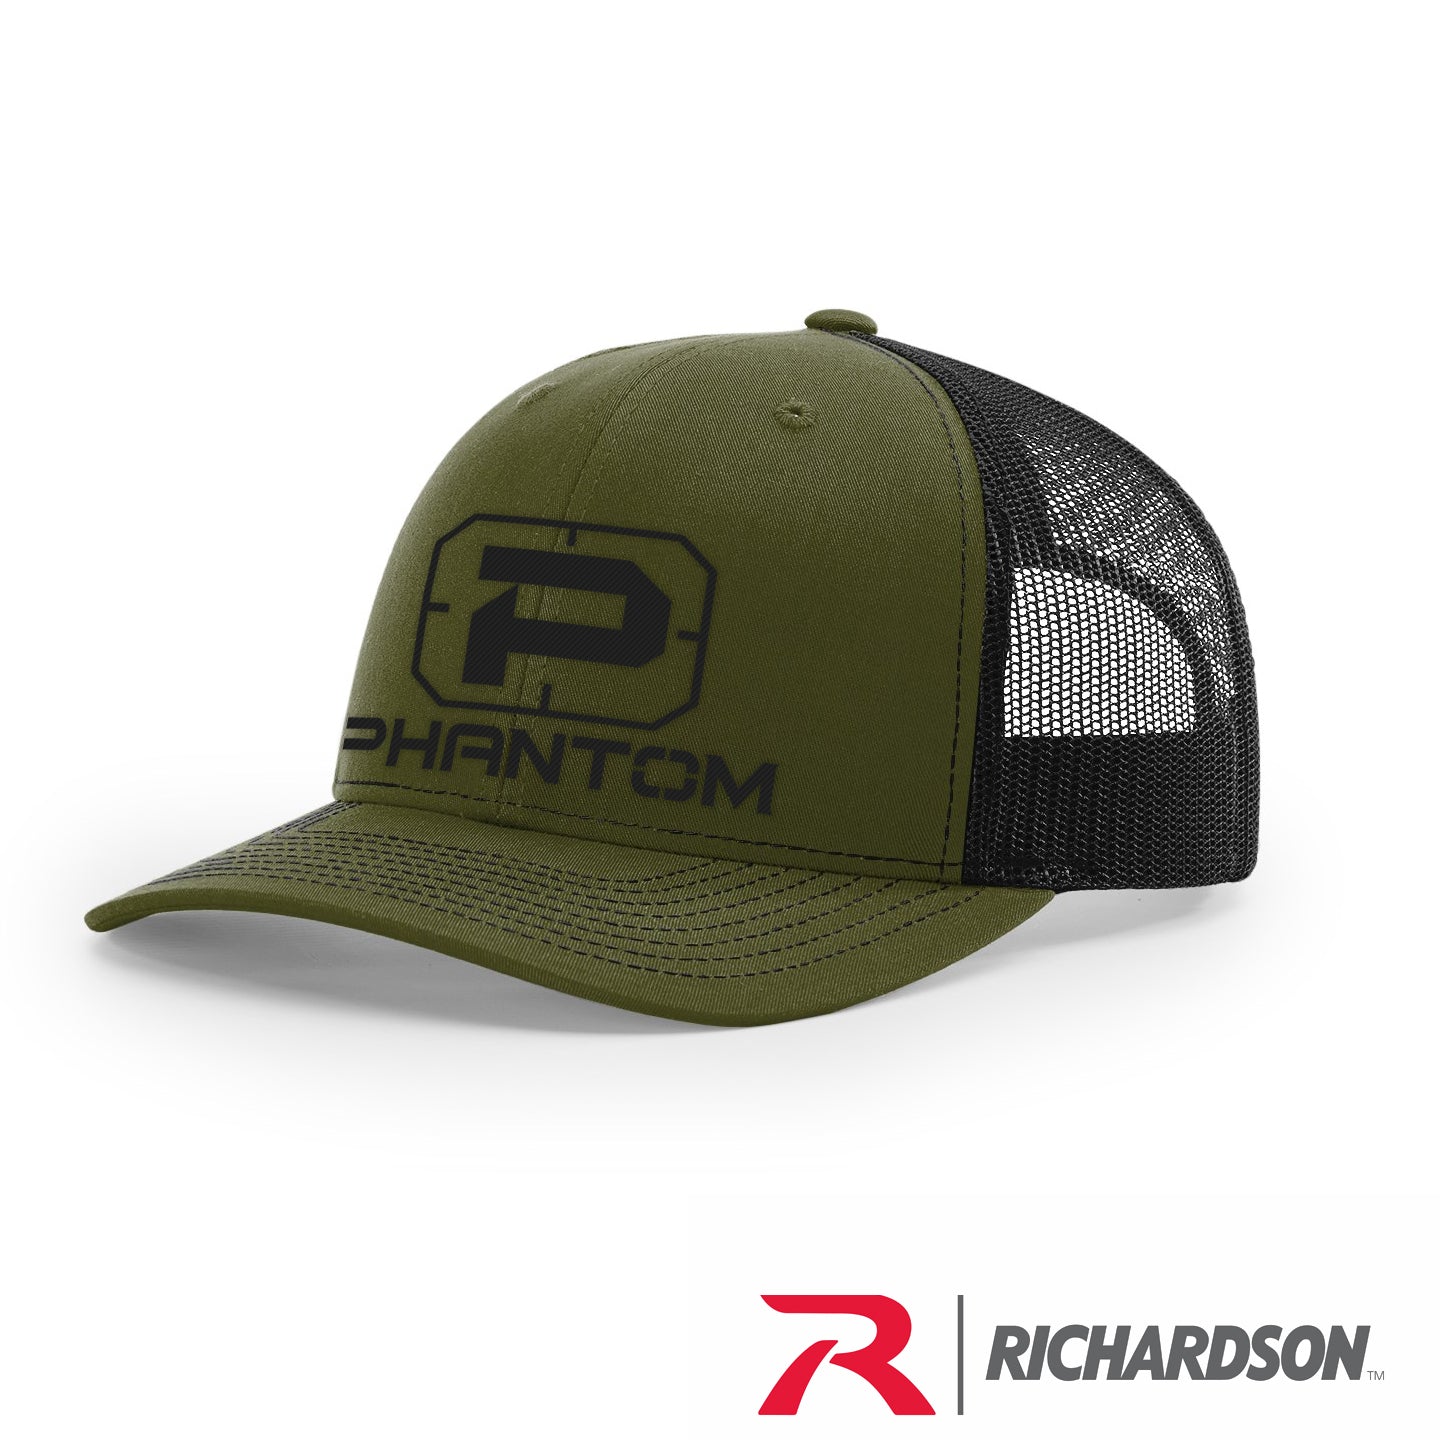 PHANTOM HUNTING RICHARDSON FLEXFIT FITTED HATS